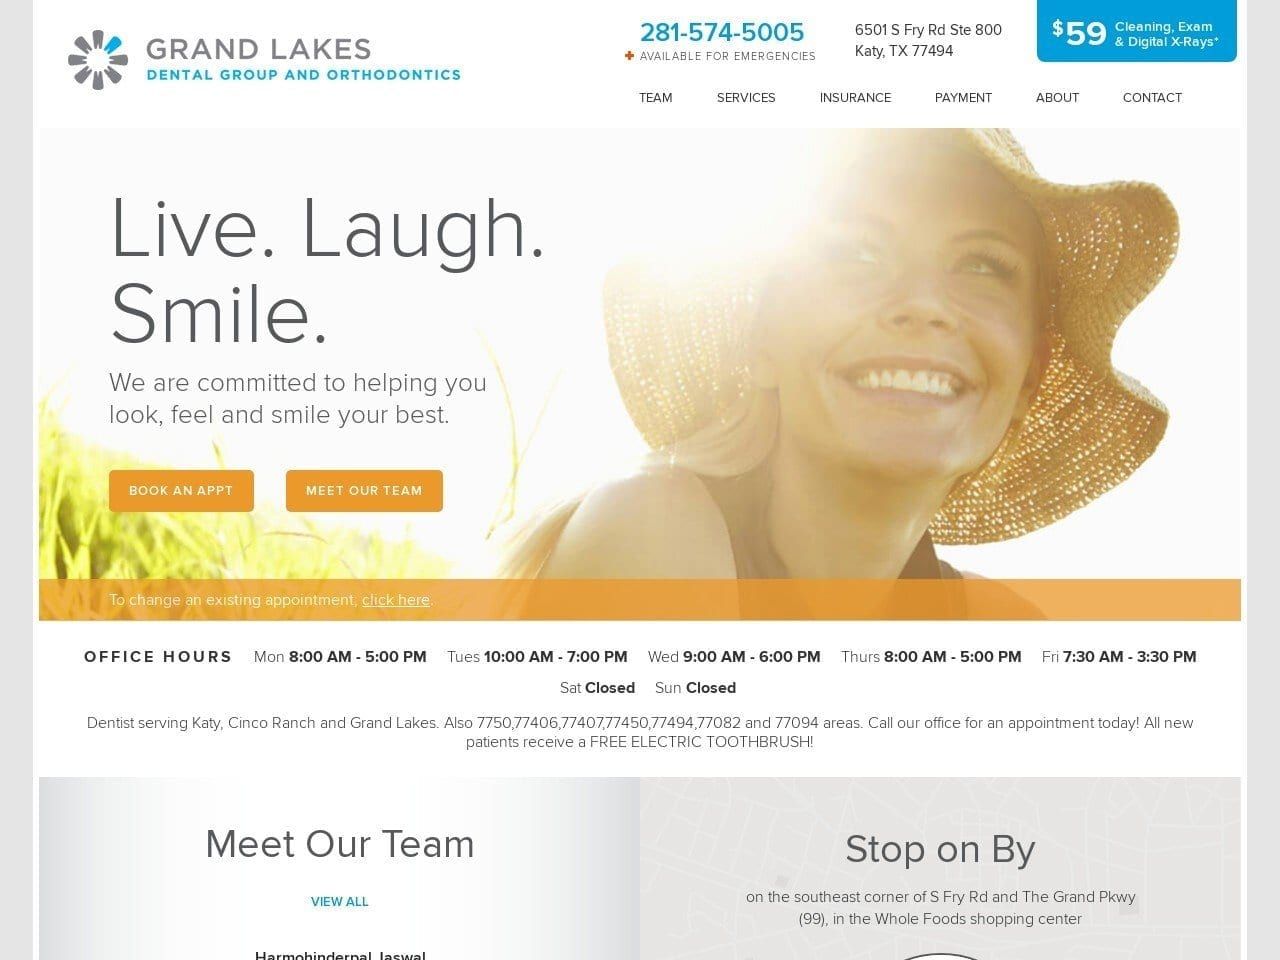 Grand Lakes Dental Group and Orthodontics Website Screenshot from grandlakesdentalgroup.com